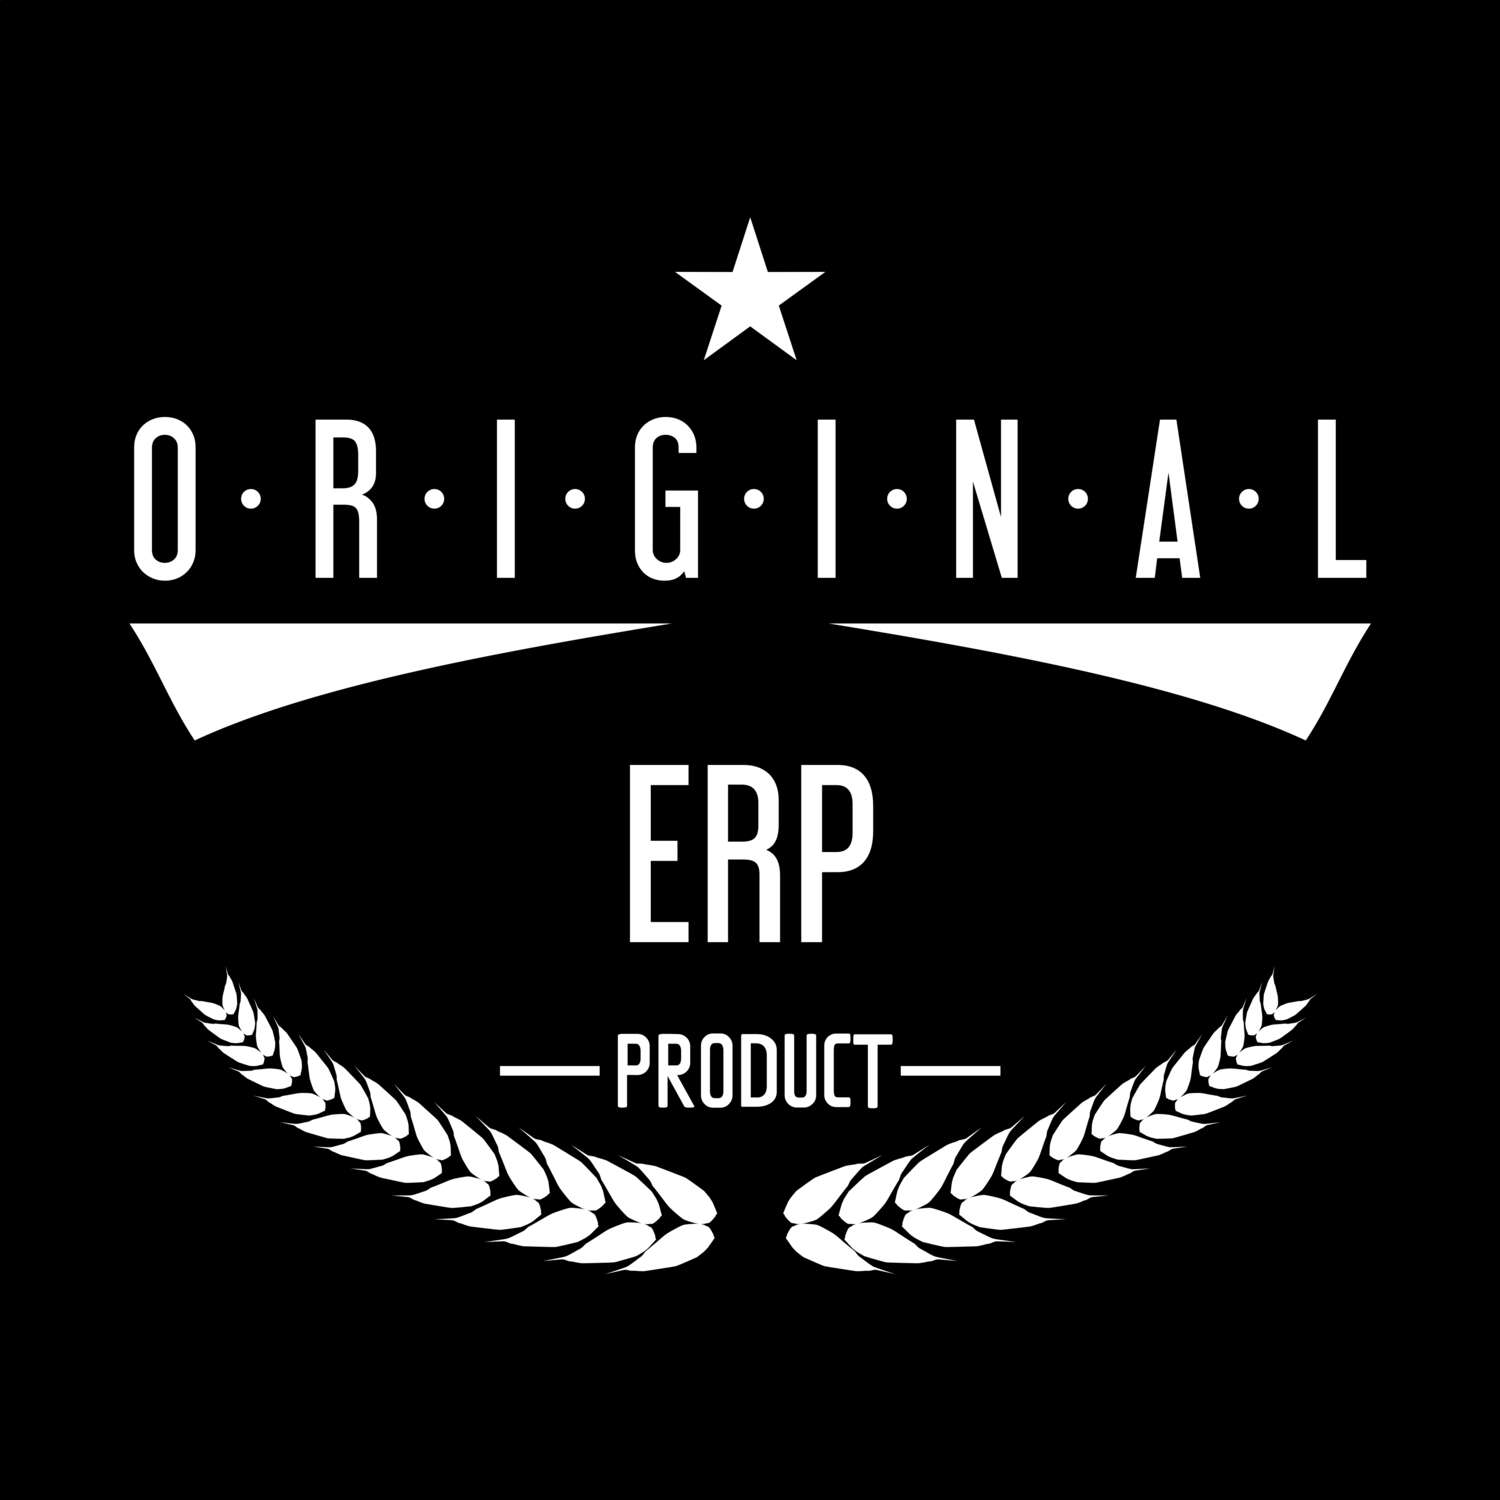 Erp T-Shirt »Original Product«